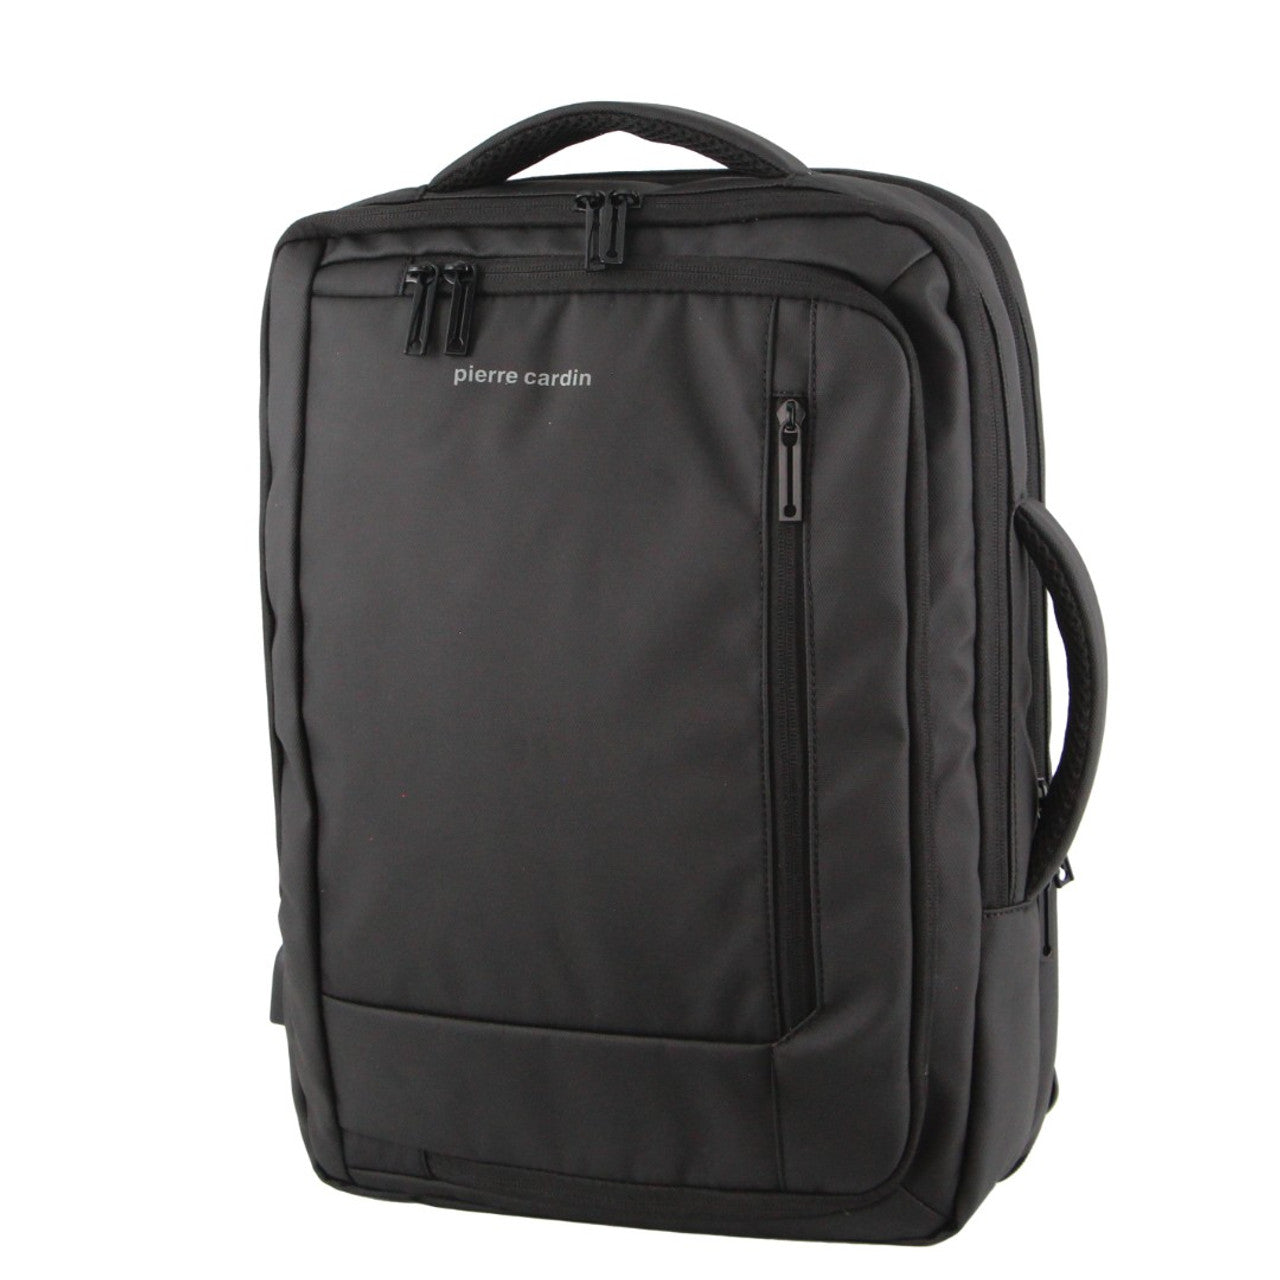 Pierre Cardin -PC3623 Top & Side handle 15in Laptop backpack w USB port - Grey *DC